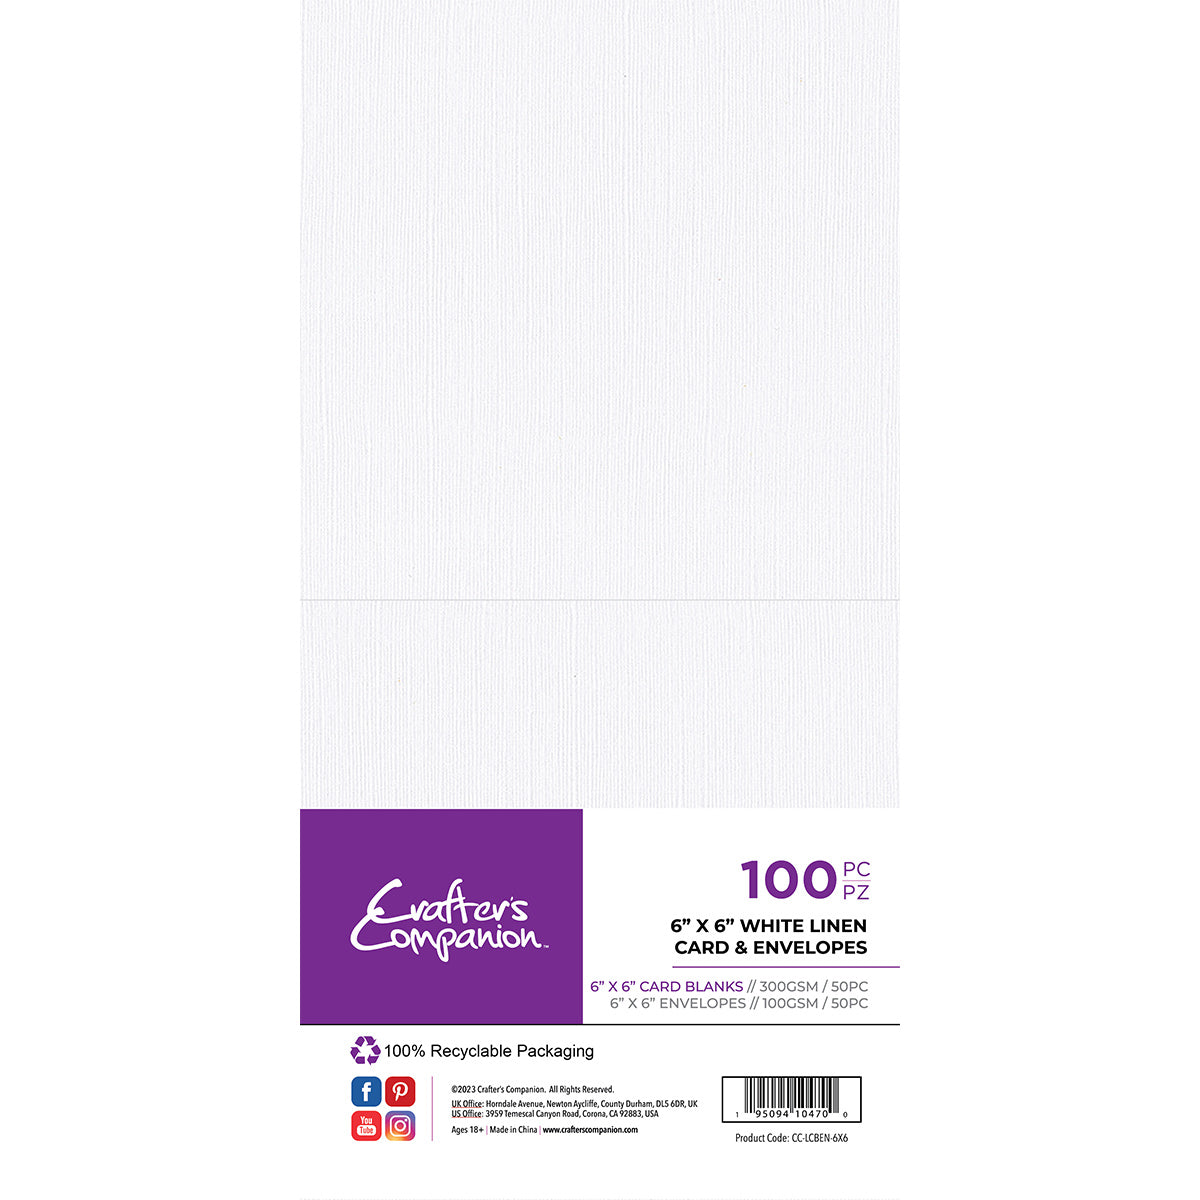 Crafter's Companion - 6"x 6" Linen Card & Envelopes 100 piece - White Linen